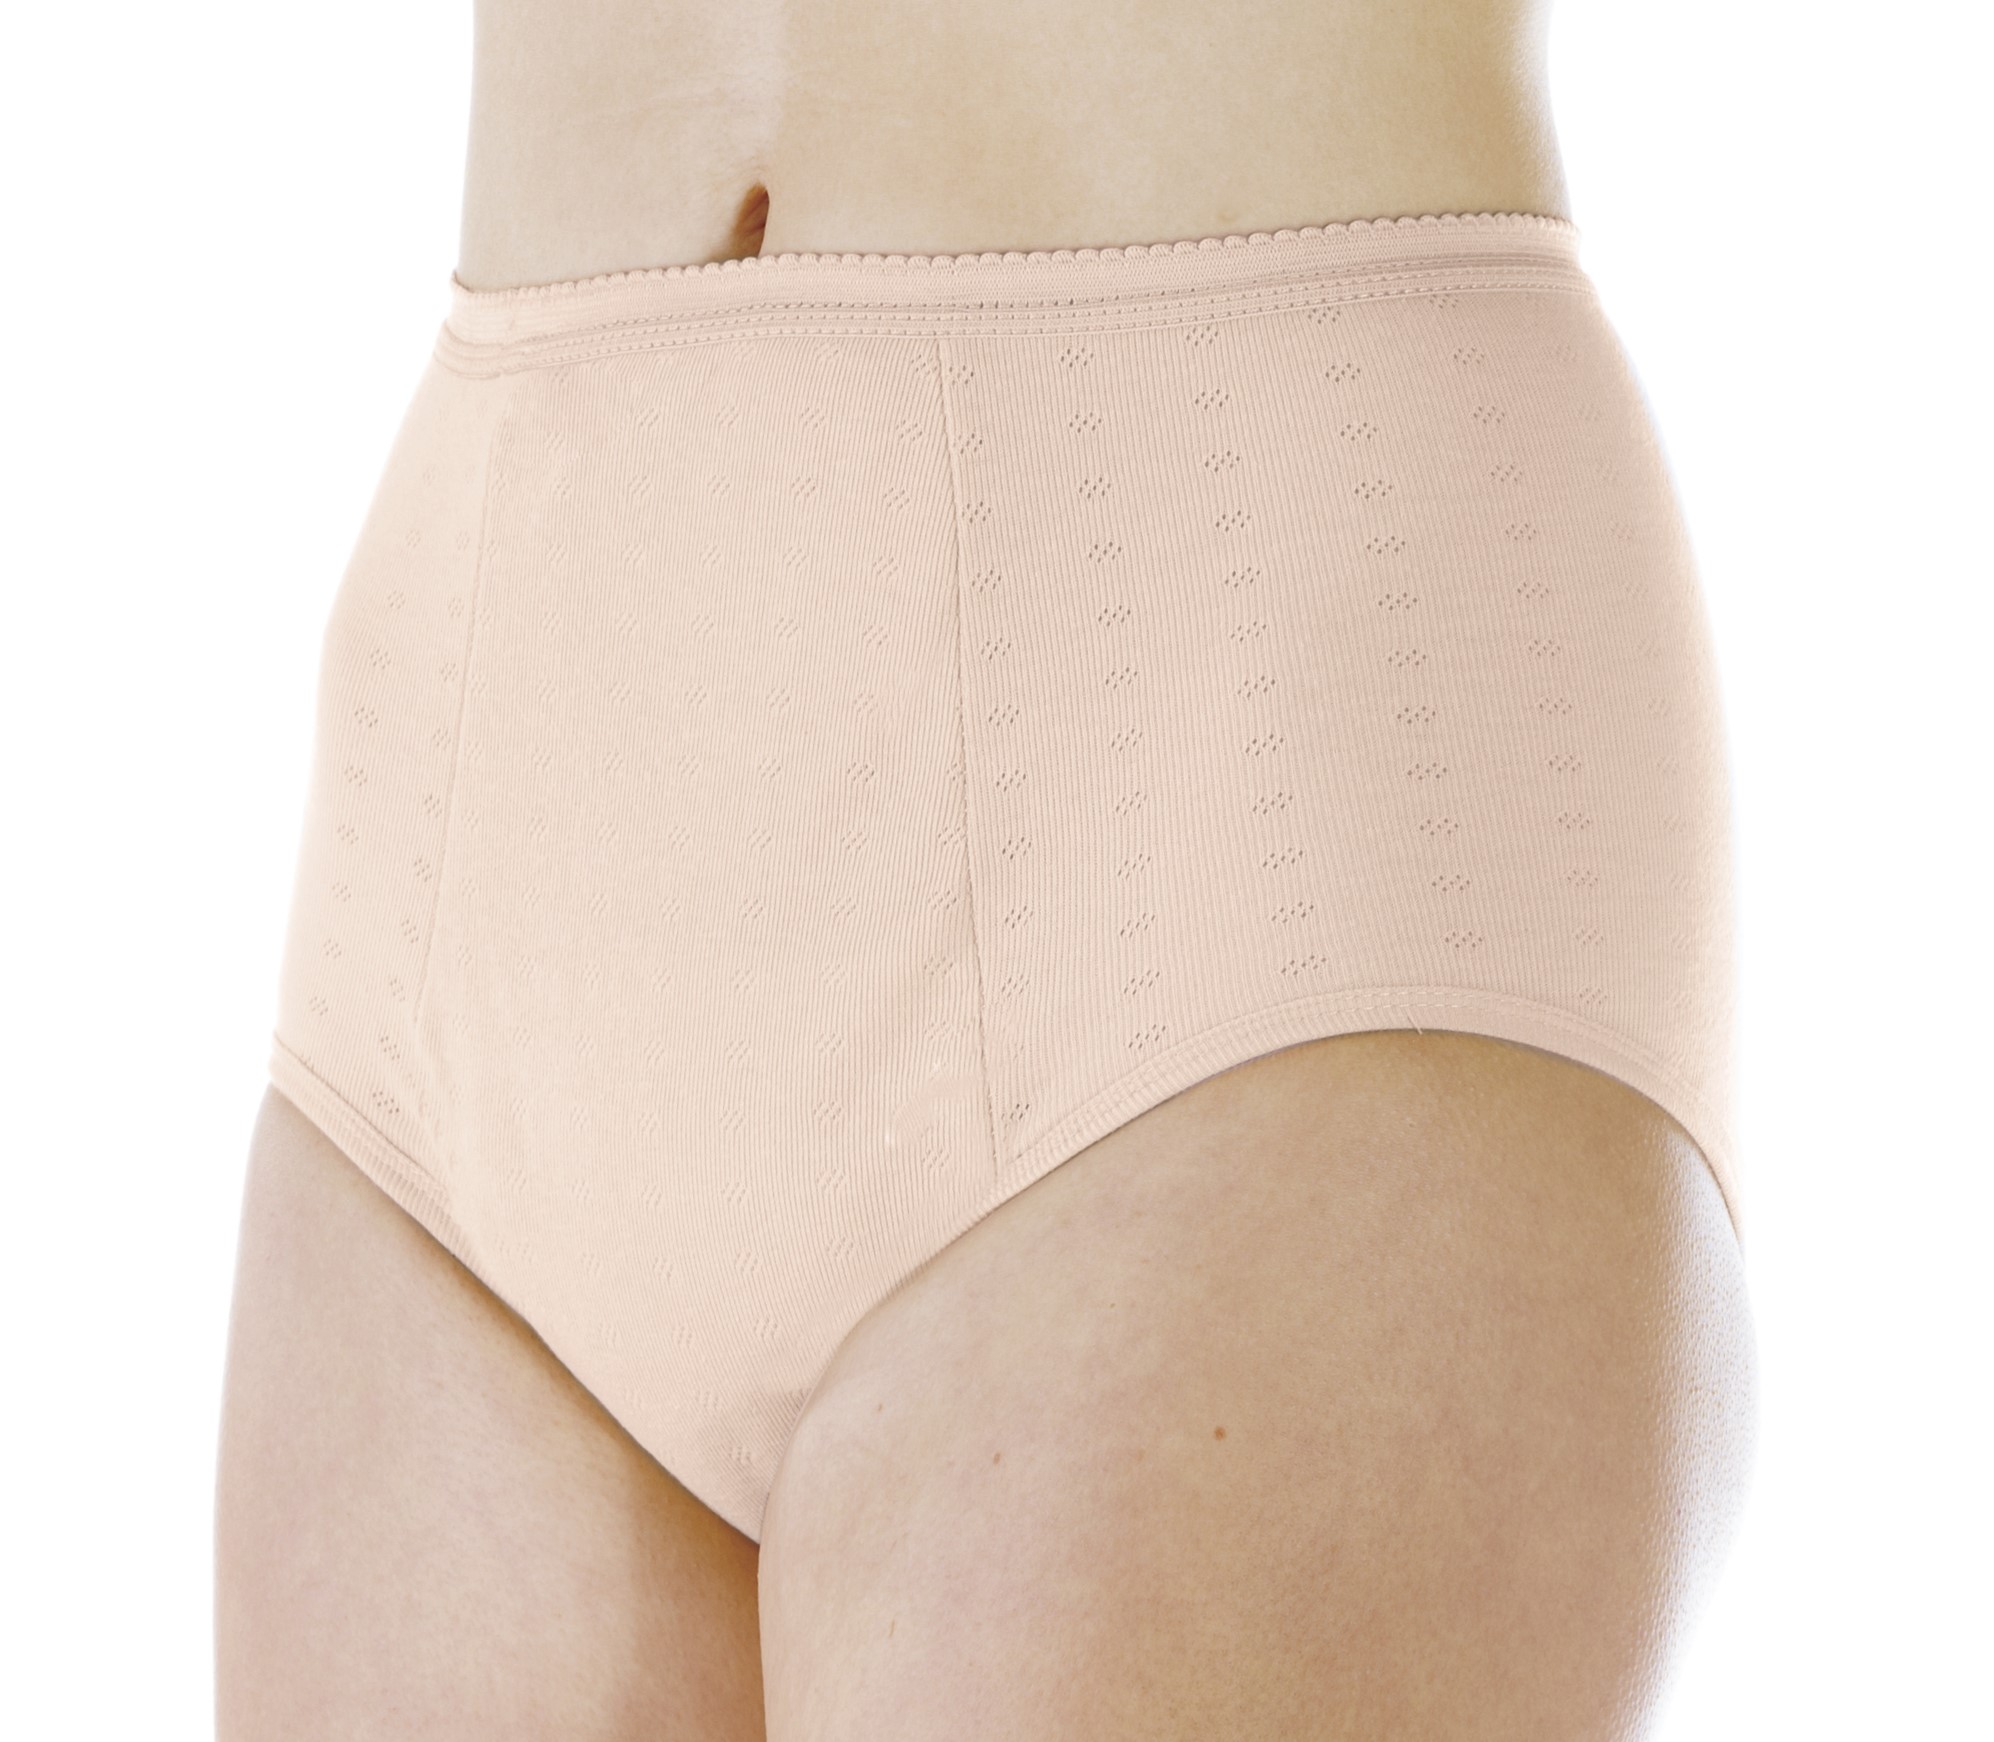 Wearever Reusable Women's Super Incontinence Panty XL White